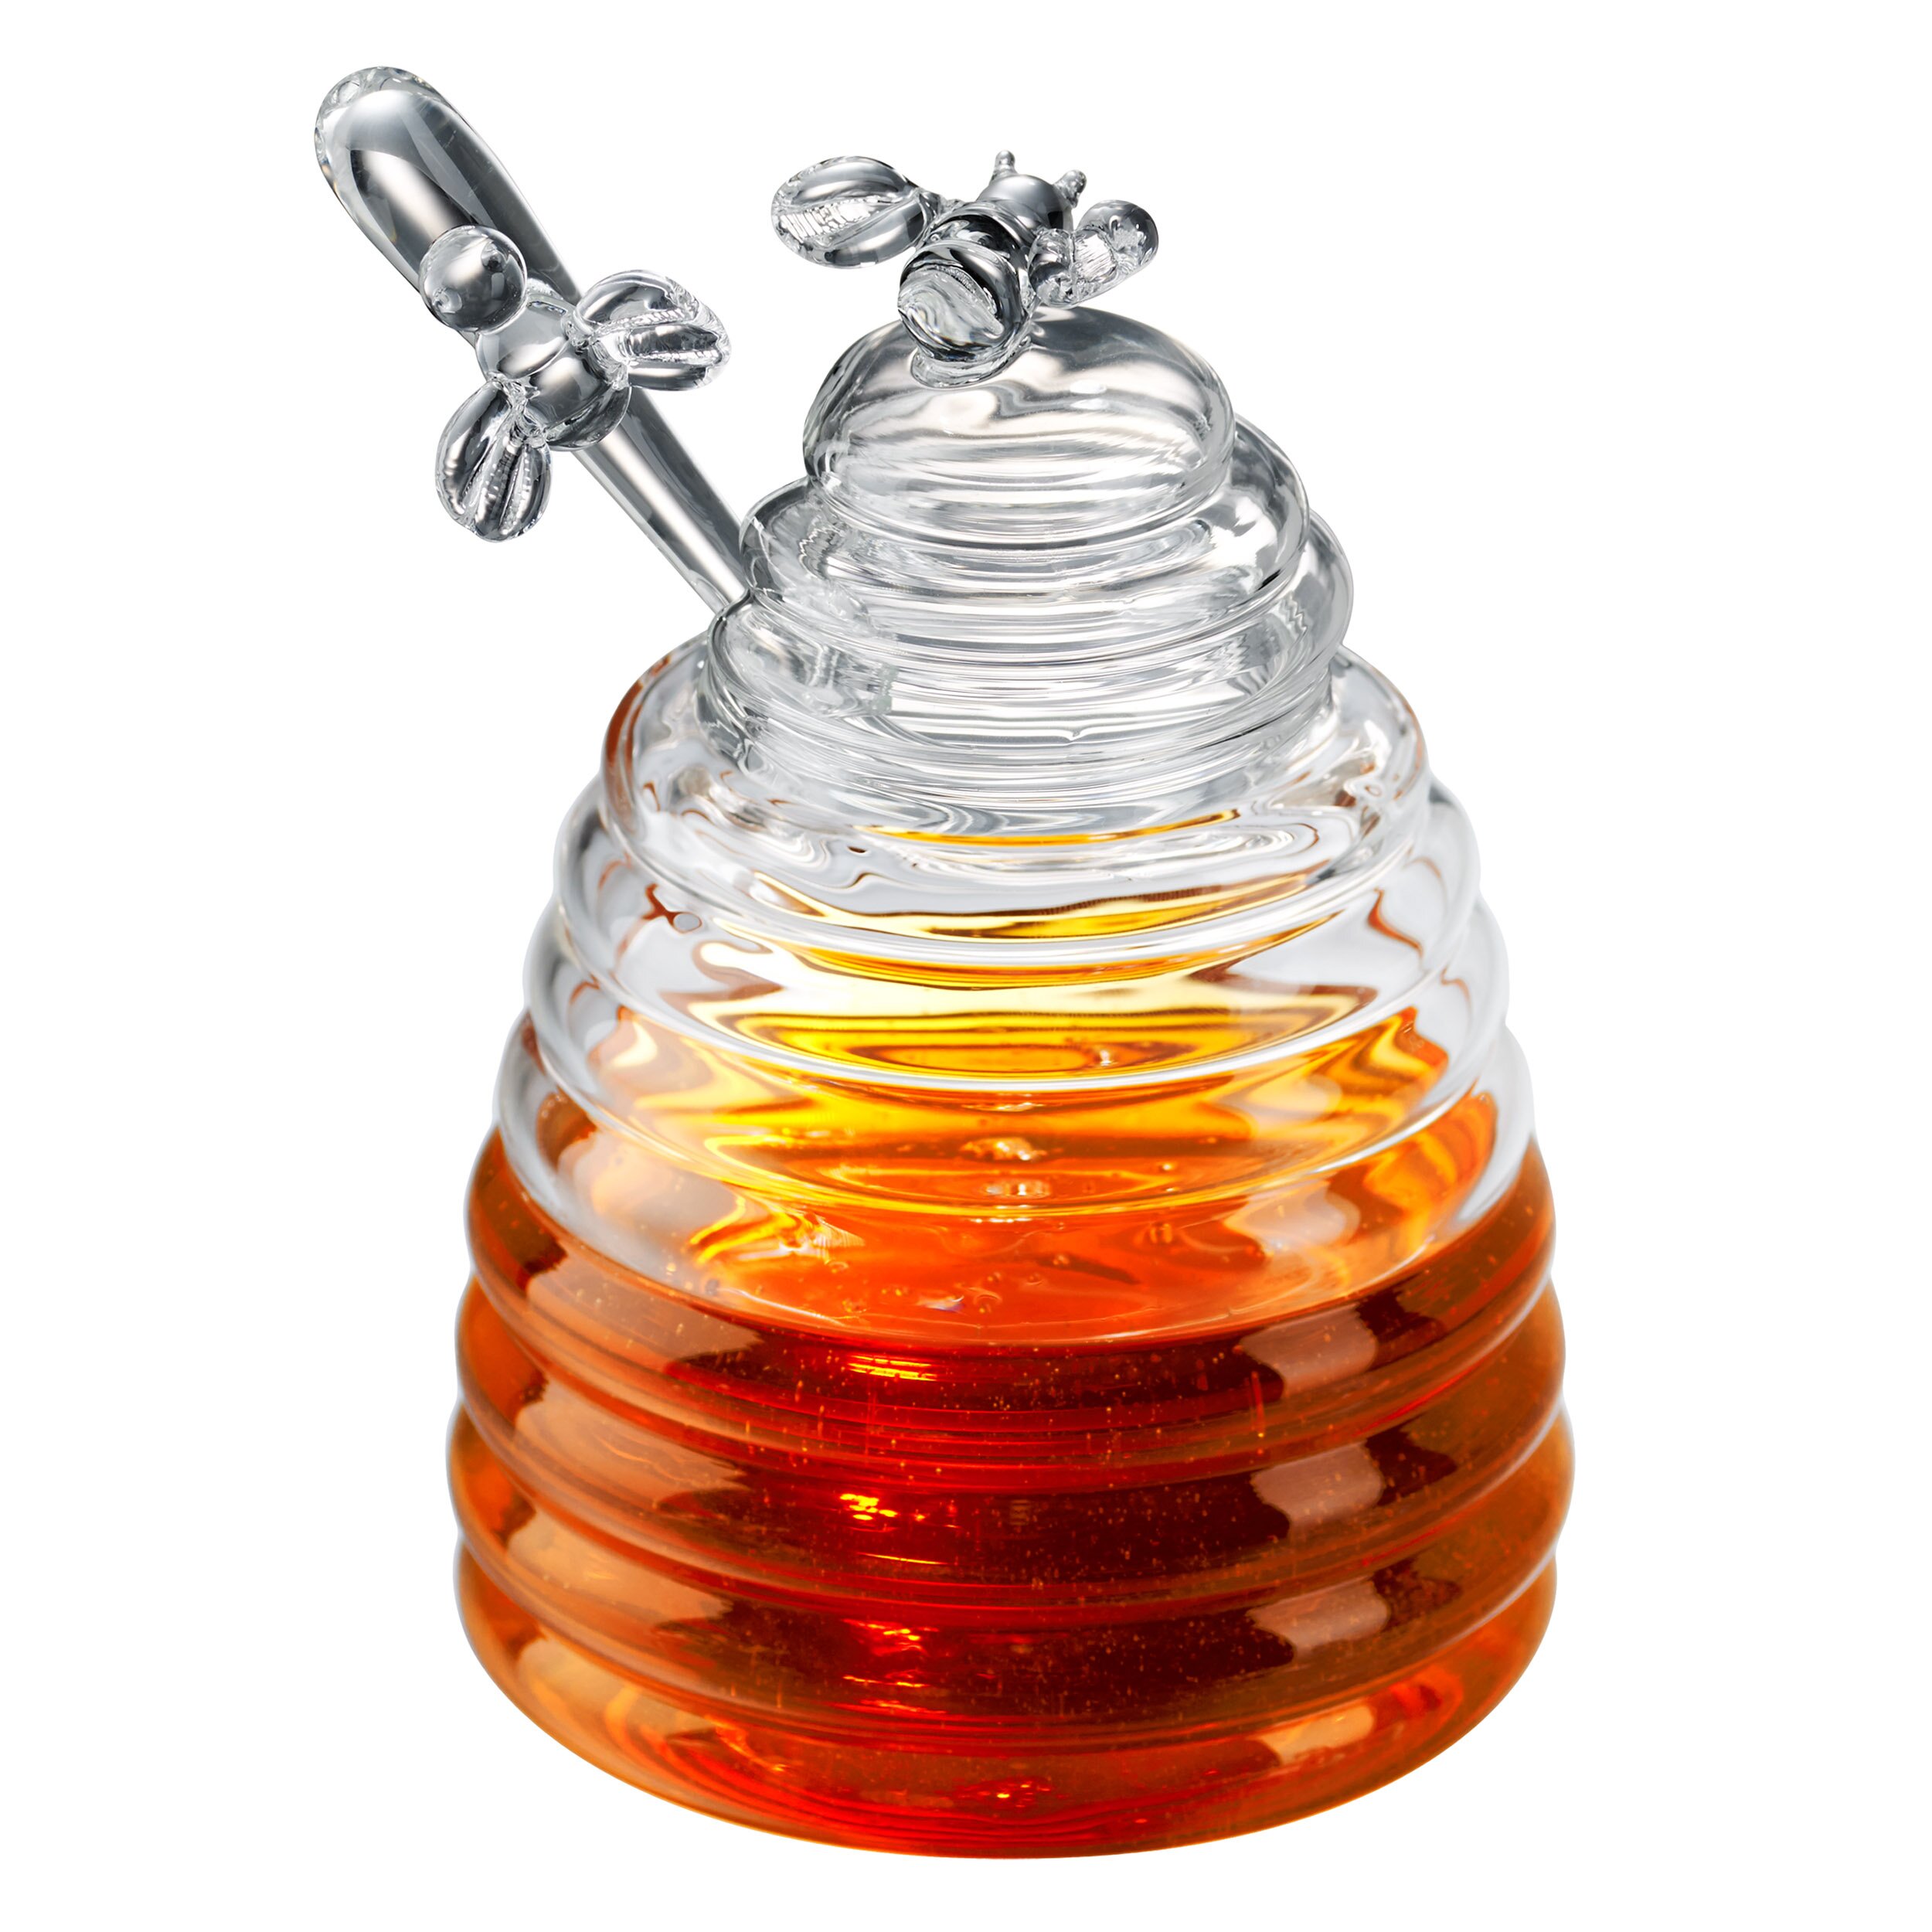 Artland Honey Bee Pot with Dipper & Reviews | Wayfair